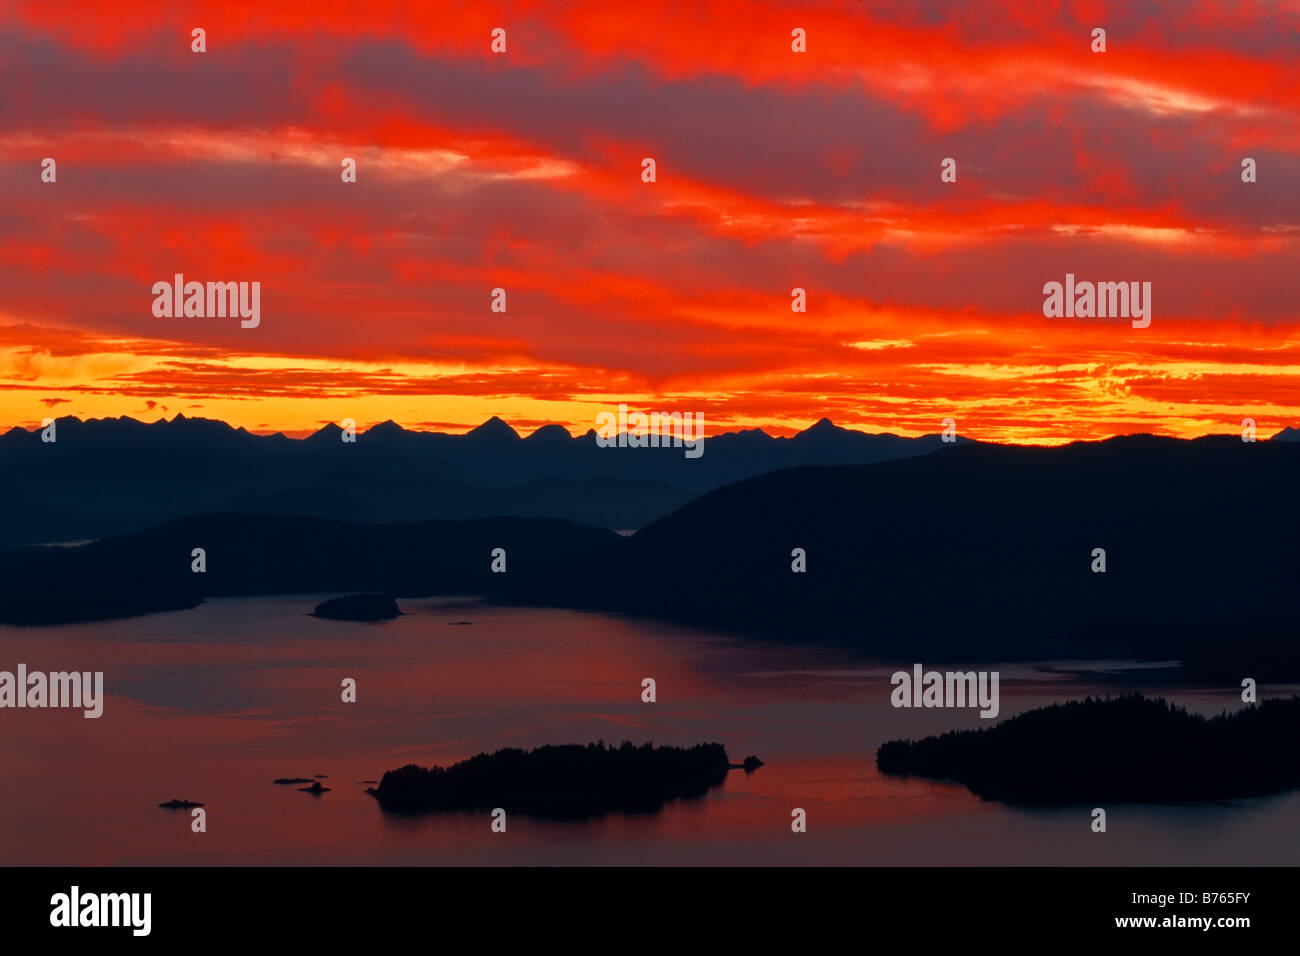 Sonnenuntergang Berg Landschaft Kruzof Insel Baranof Island Alaska Usa Hintergrundbeleuchtung Schatten Stockfoto